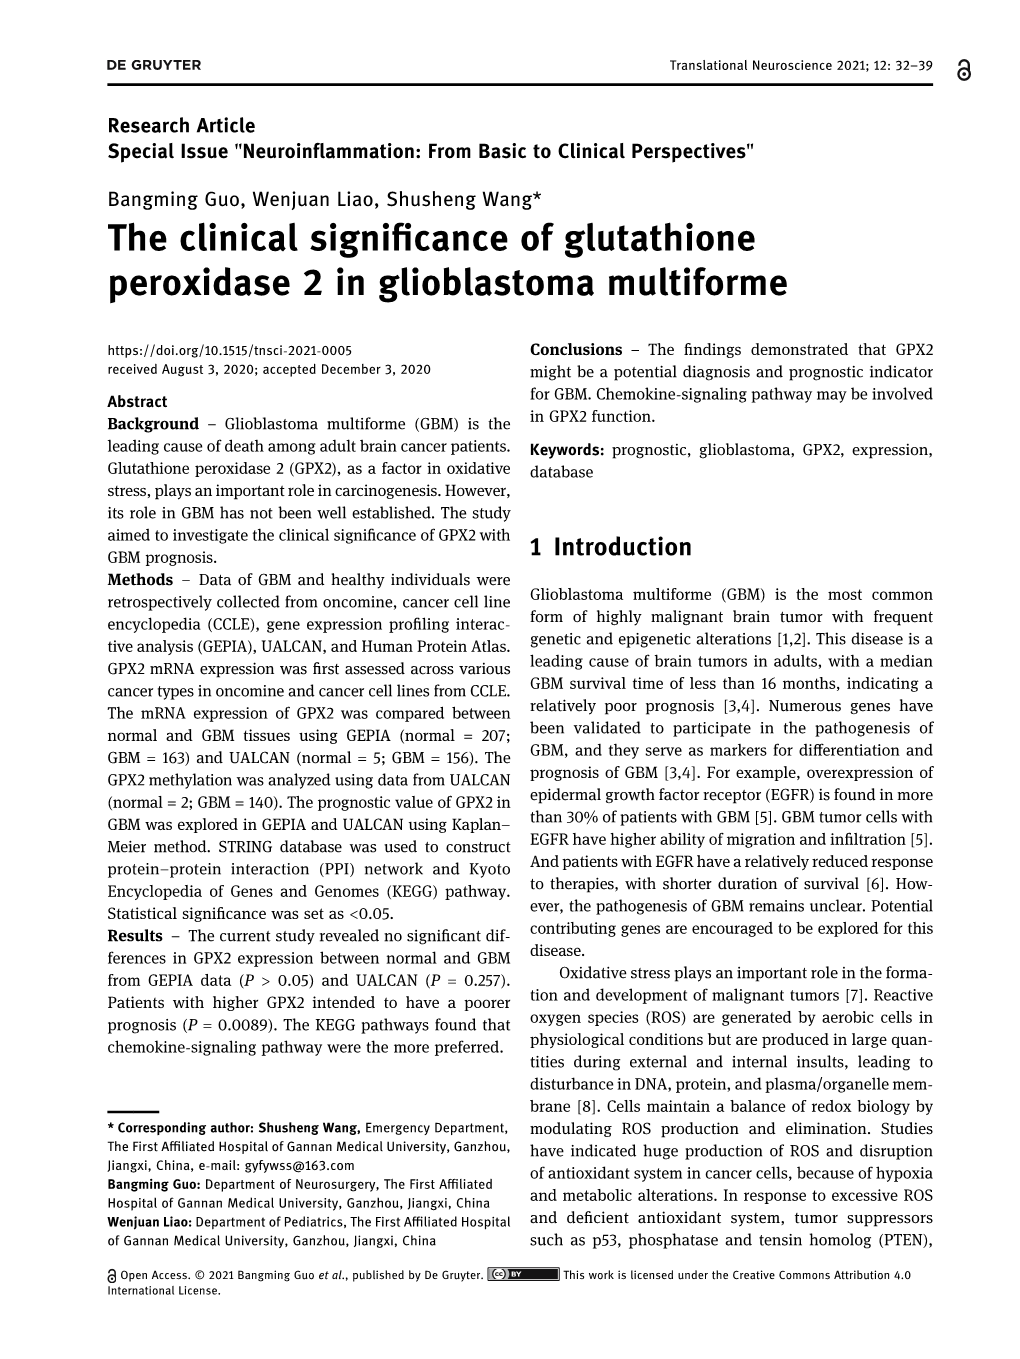 The Clinical Significance of Glutathione Peroxidase 2 in Glioblastoma